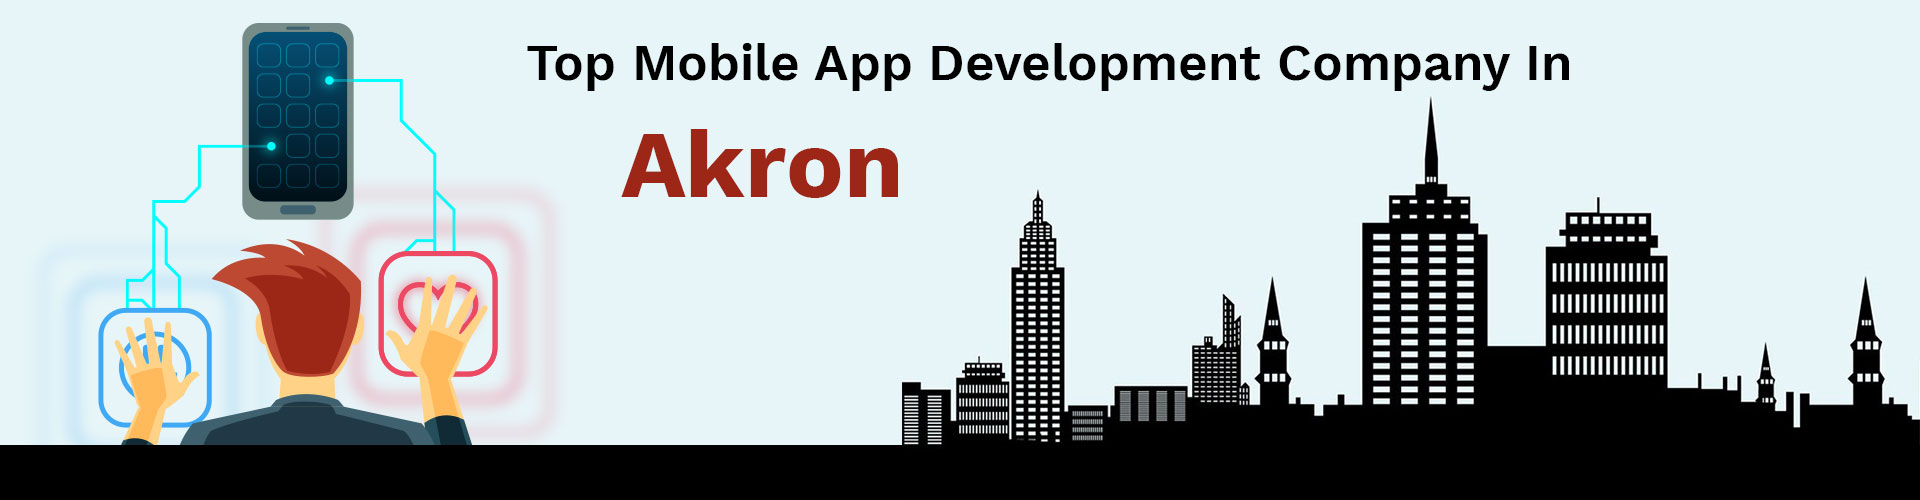 mobile app development company akron